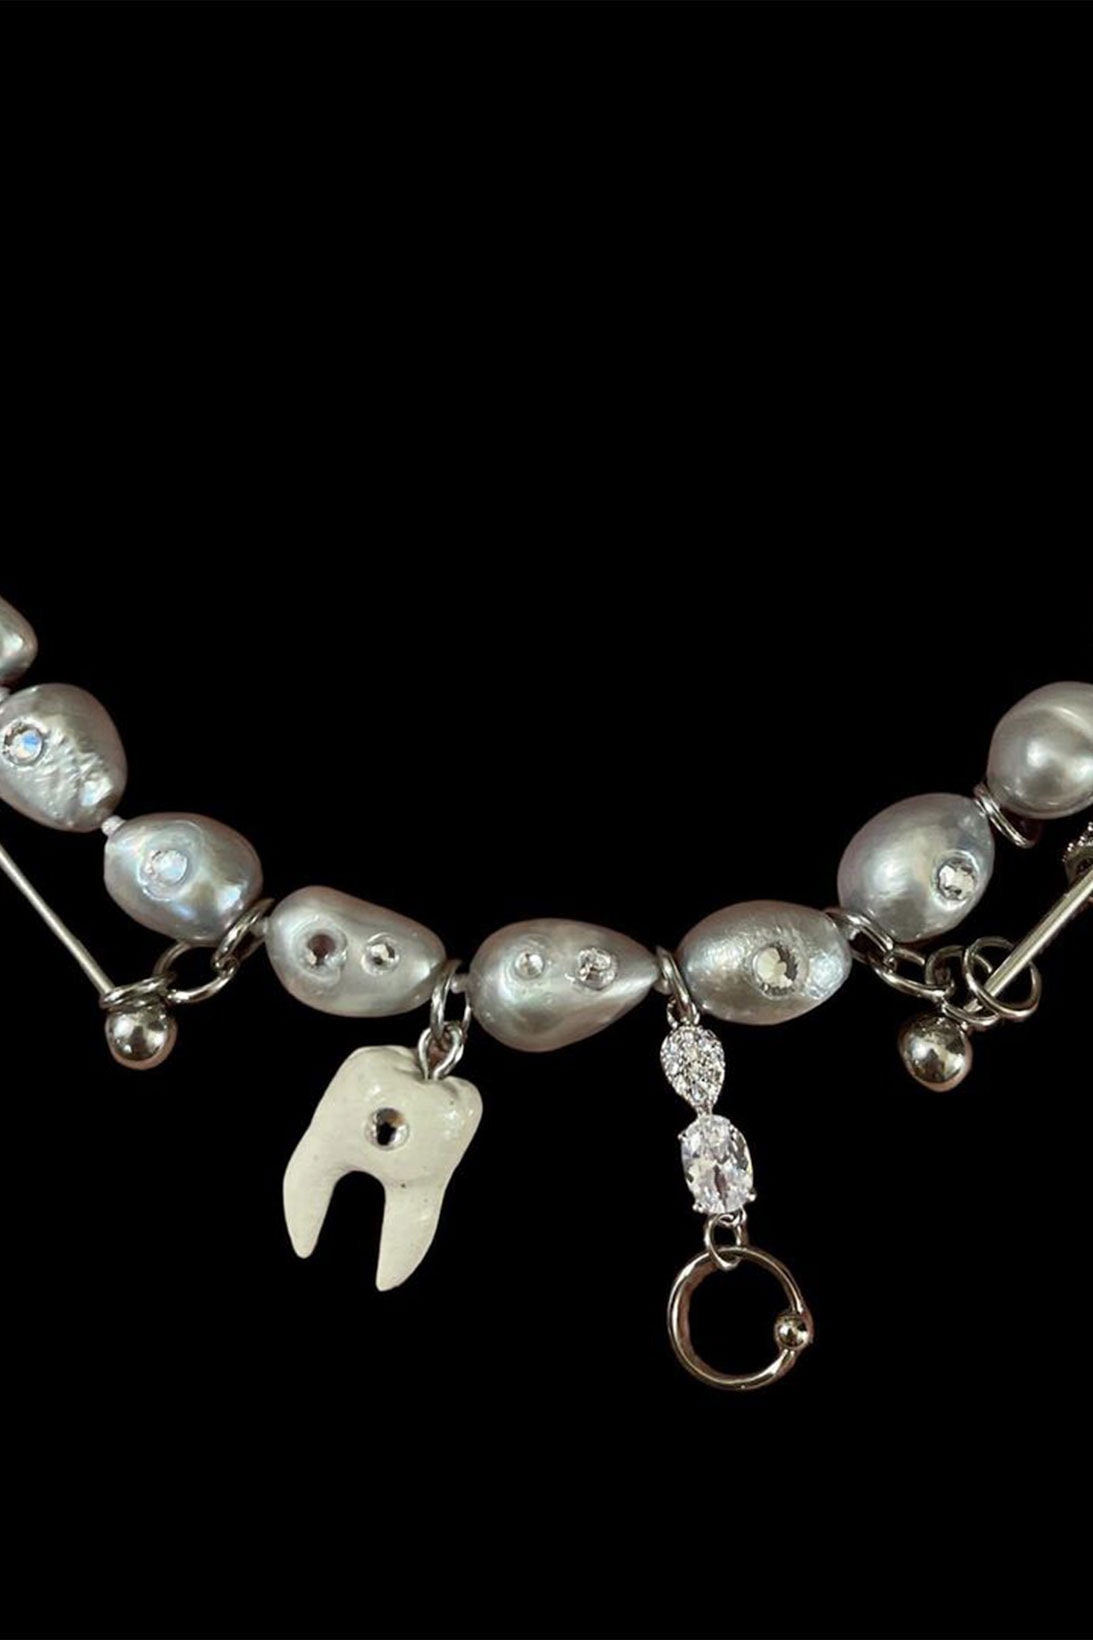 Twelve Jewelry Necklaces Bone Pendant Teeth Pearls